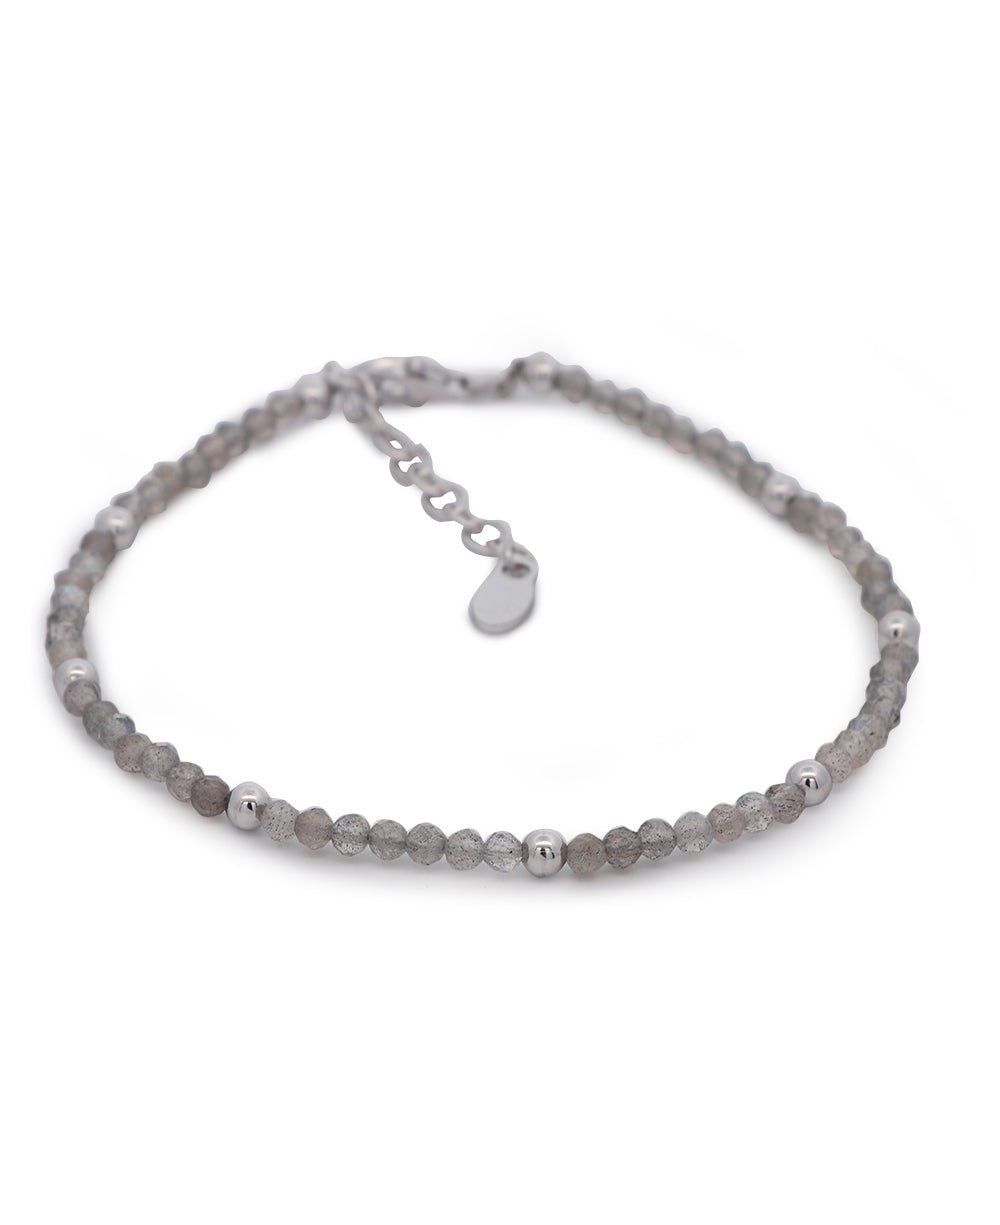 Sleek and Elegant Labradorite Crystal Bracelets, Sold Individually - Bracelets Silver Beads